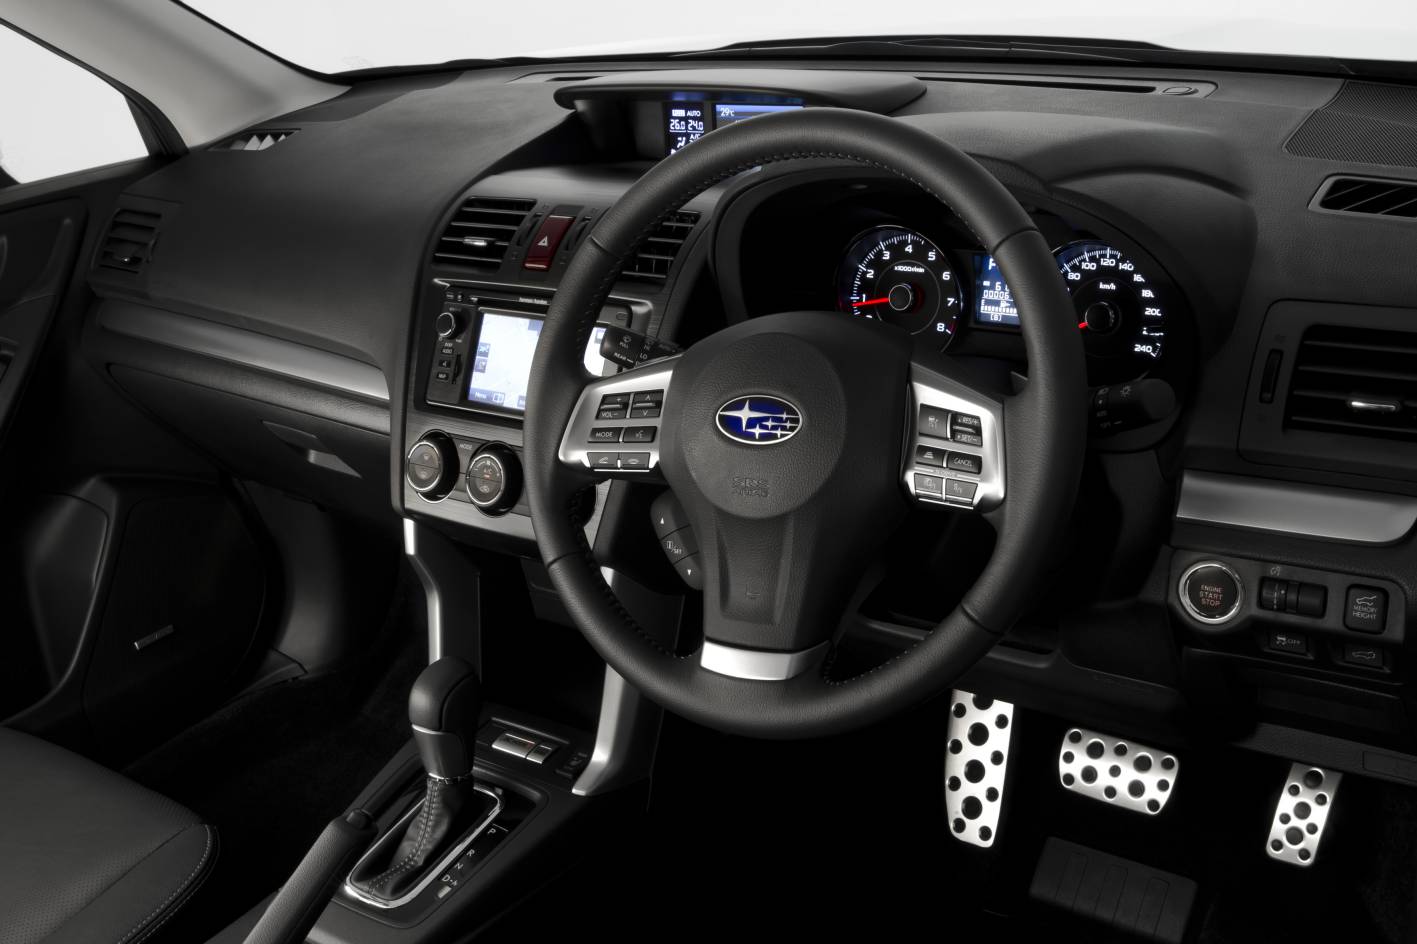 http://performancedrive.com.au/wp-content/uploads/2013/01/2013-Subaru-Forester-XT-Premium-interior.jpg